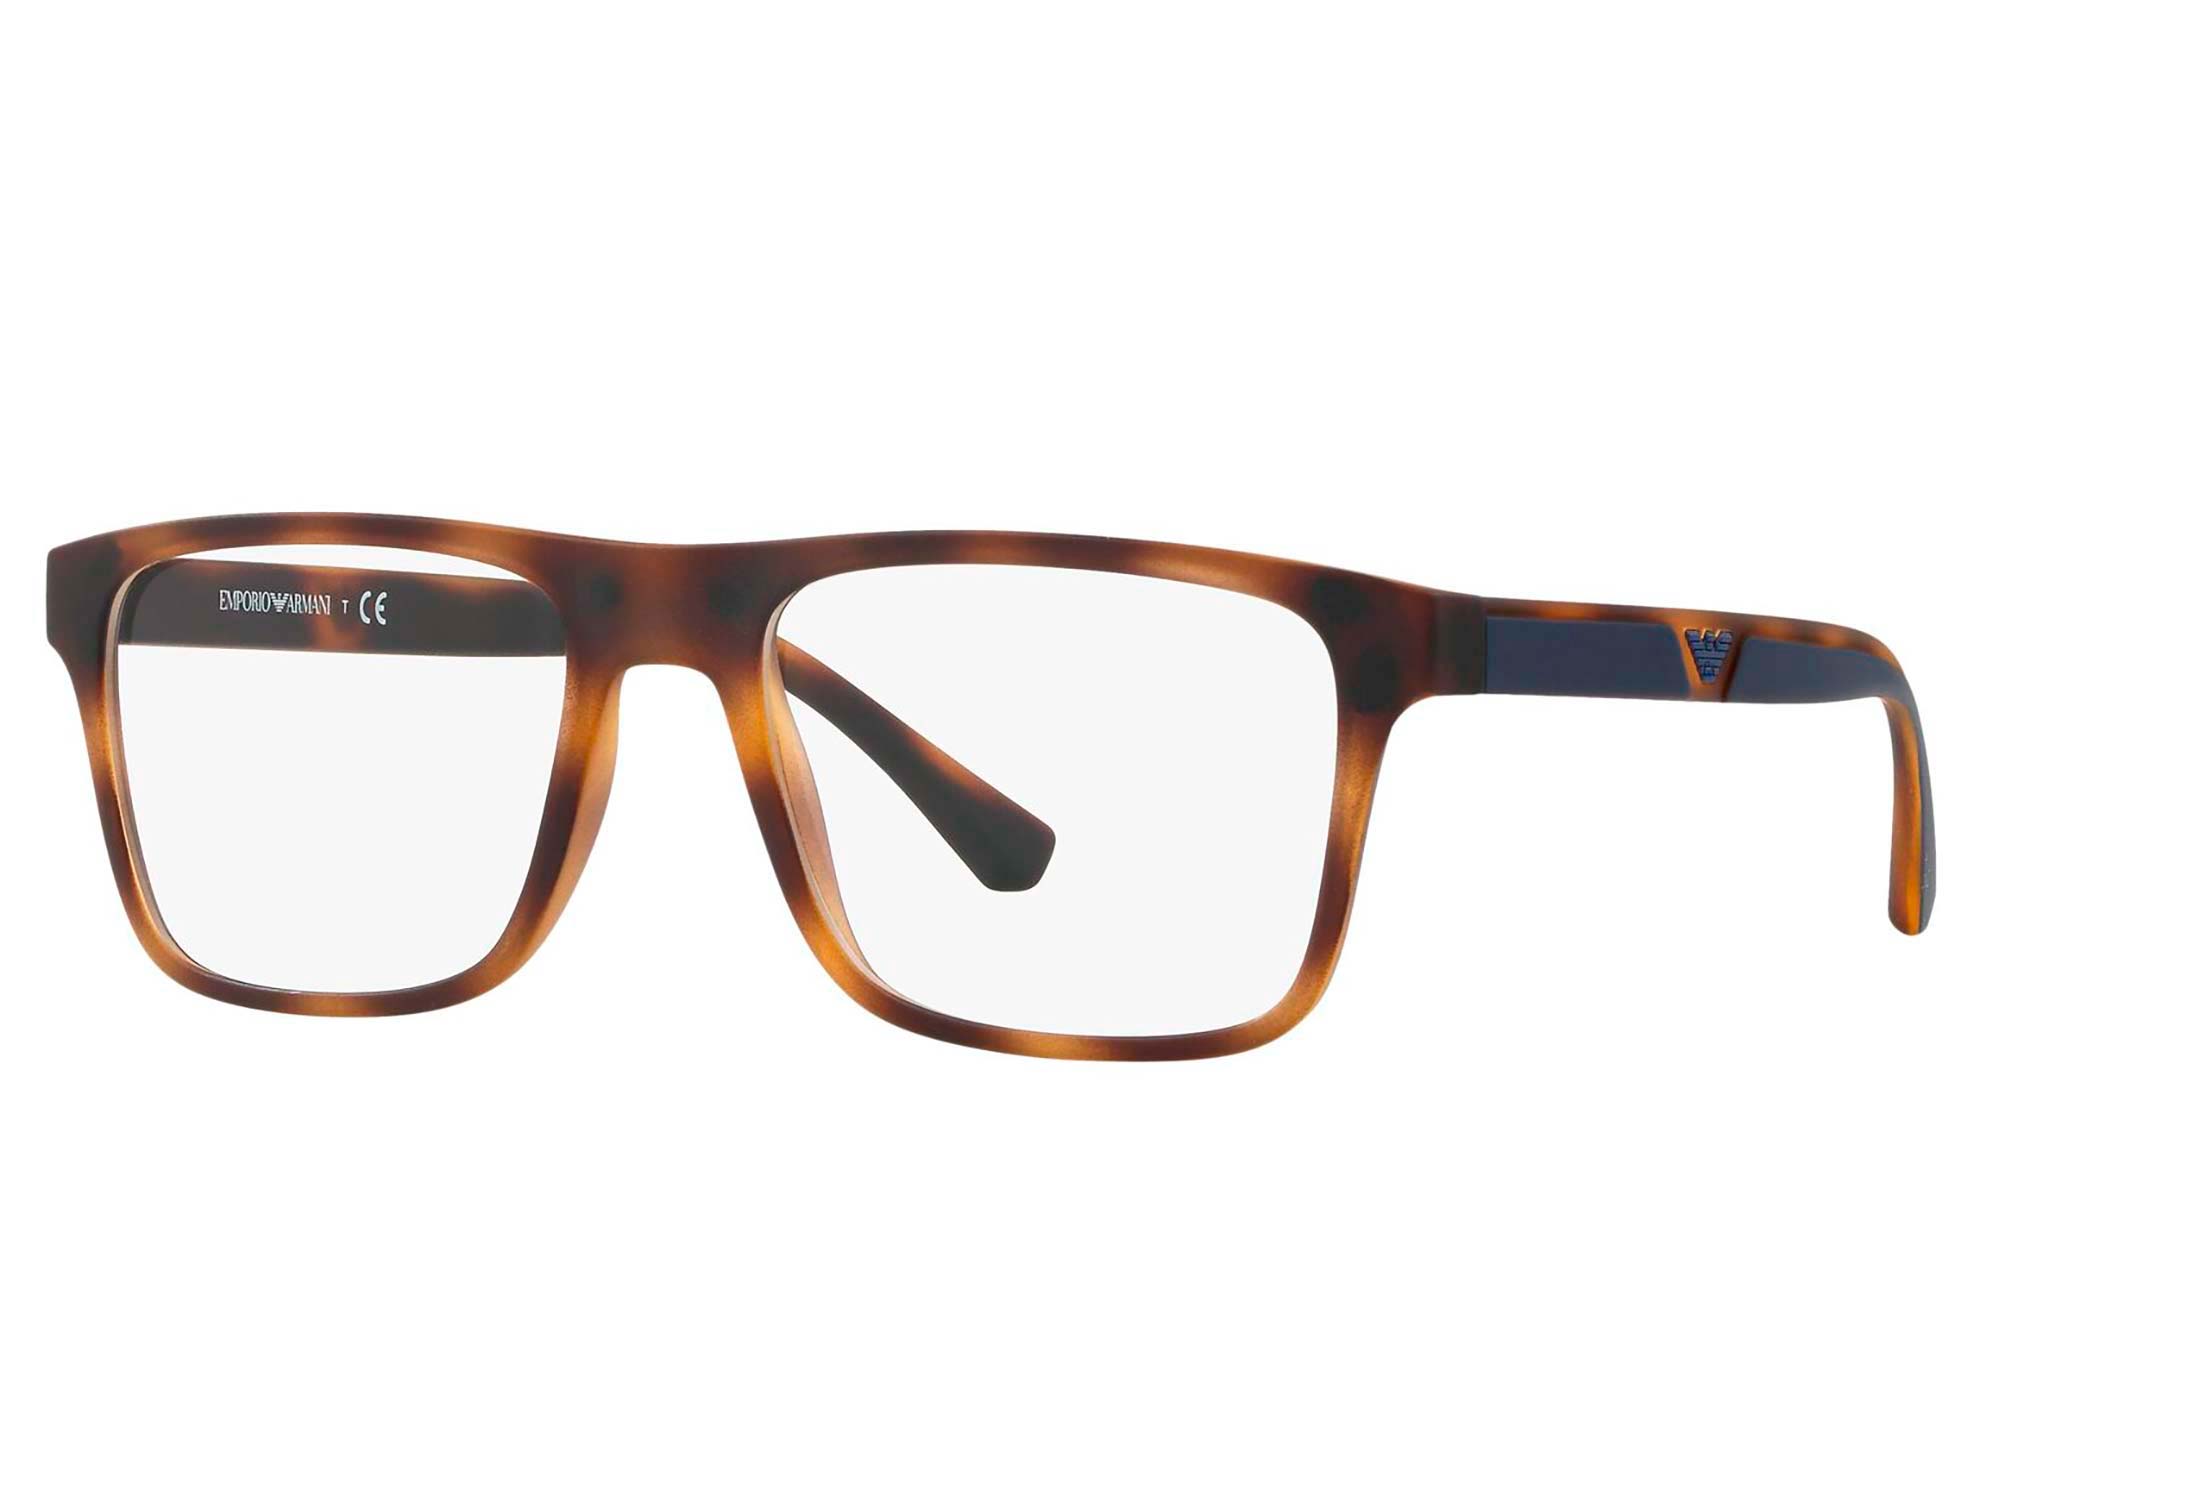 Emporio Armani briller - ea4115 50891w - Mønstret, Large Hel ramme i Plast - Rektangulære